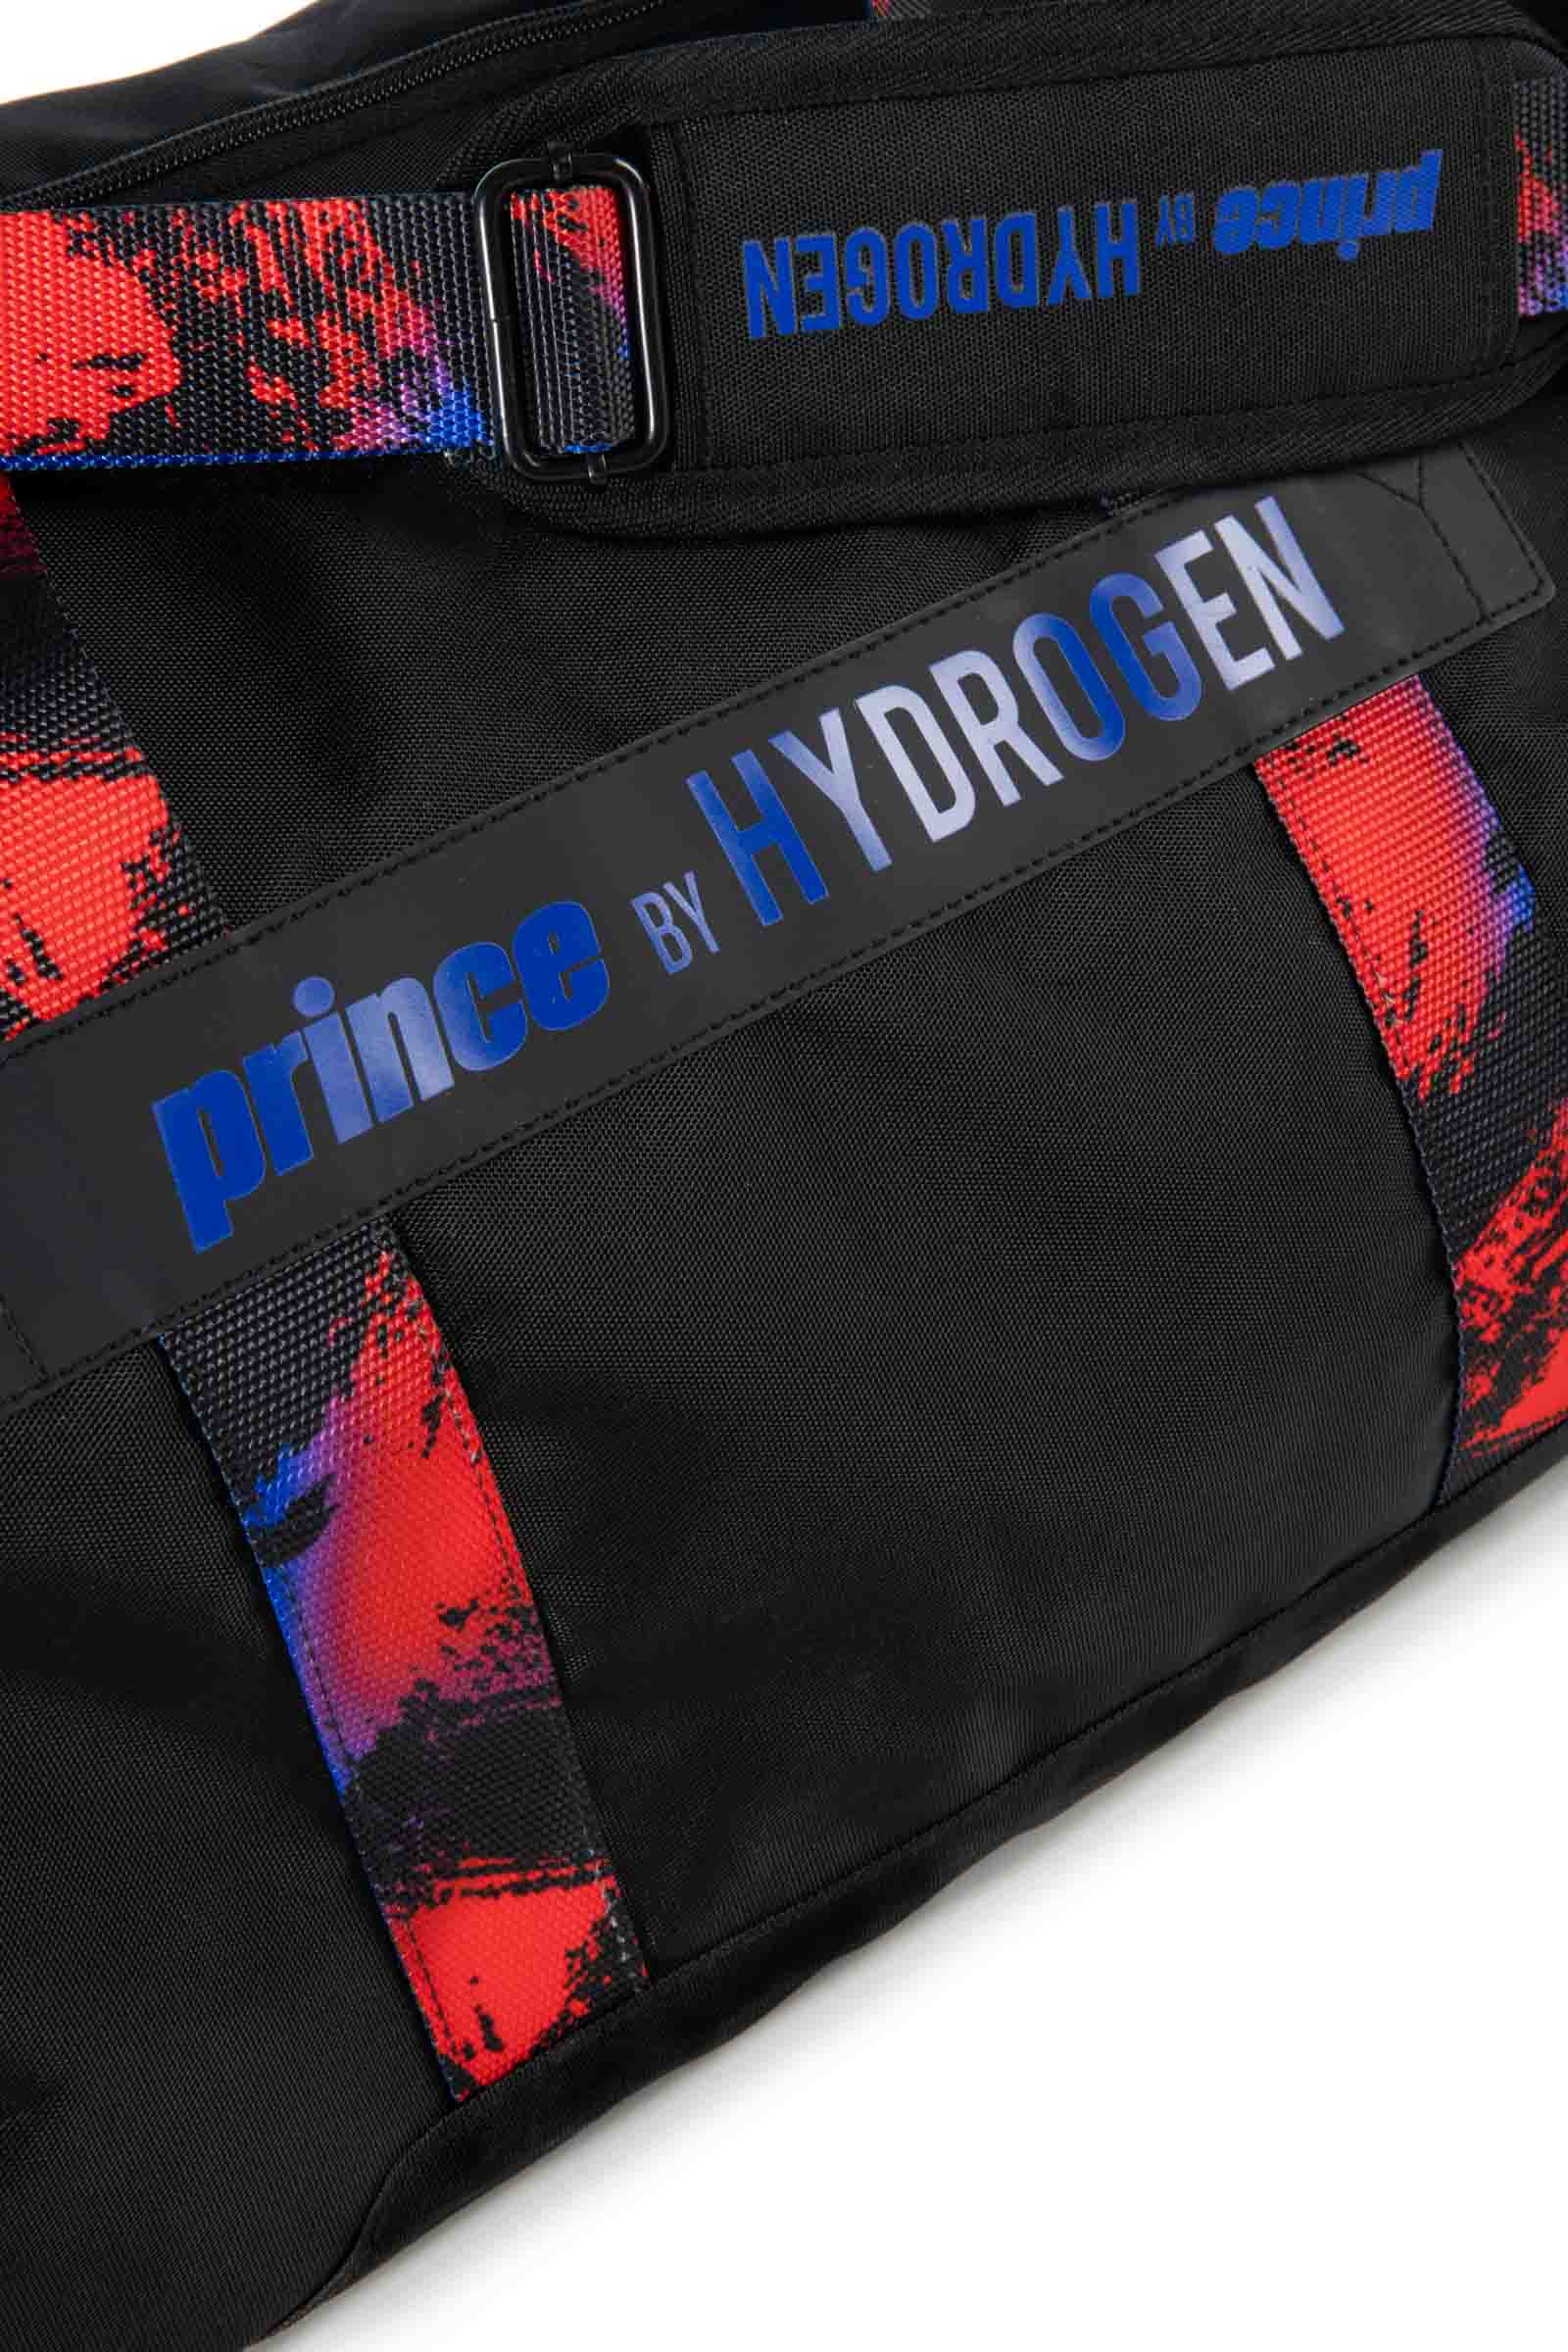 RANDOM BAG PRINCE BY HYDROGEN - BLACK,RED,BLUE - Abbigliamento sportivo | Hydrogen